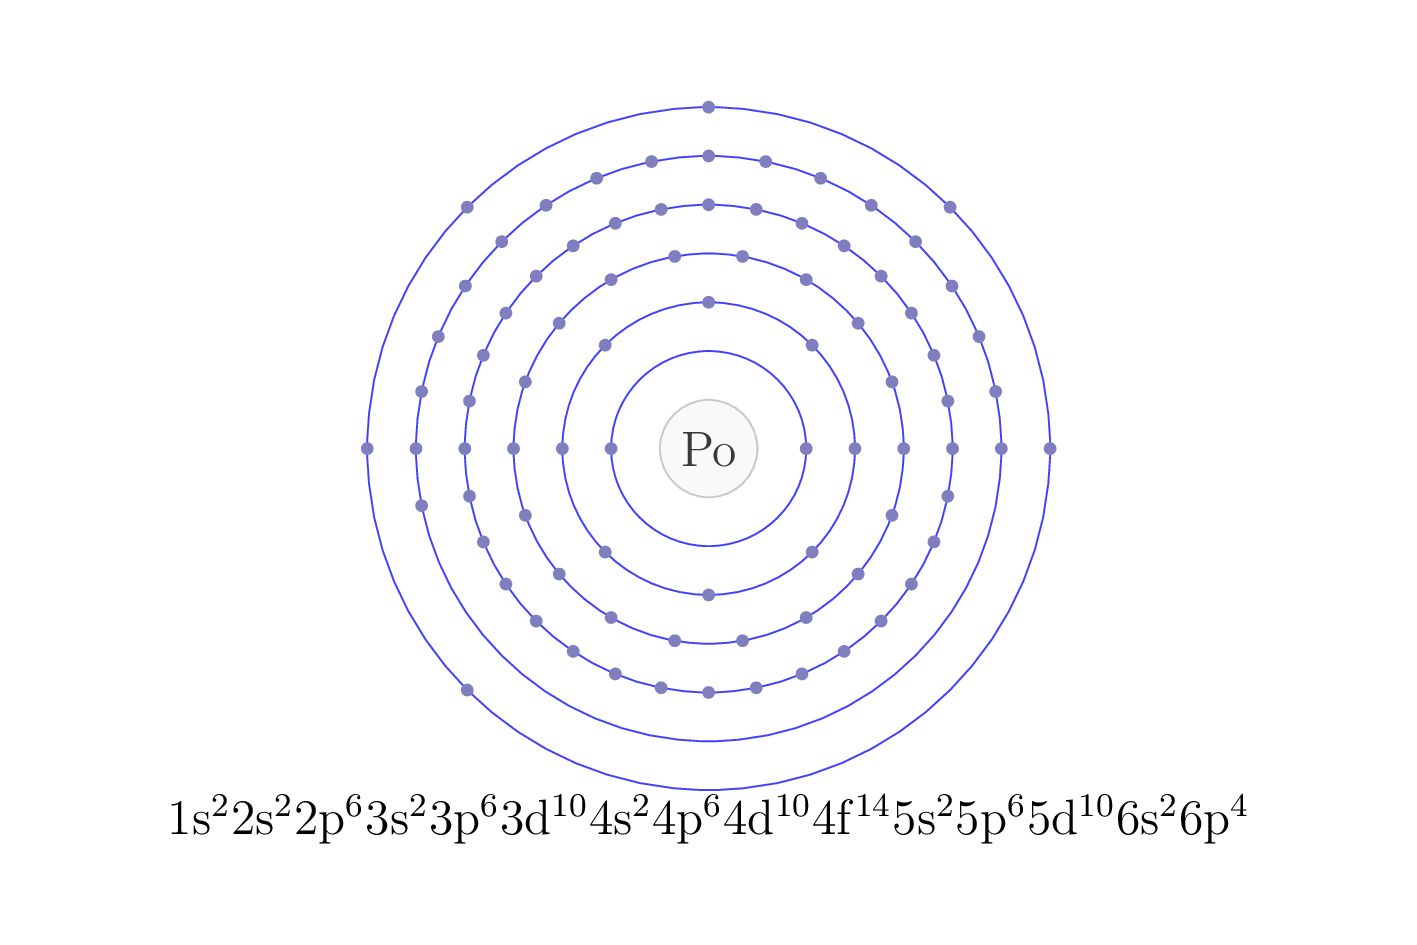 electron configuration of element Po